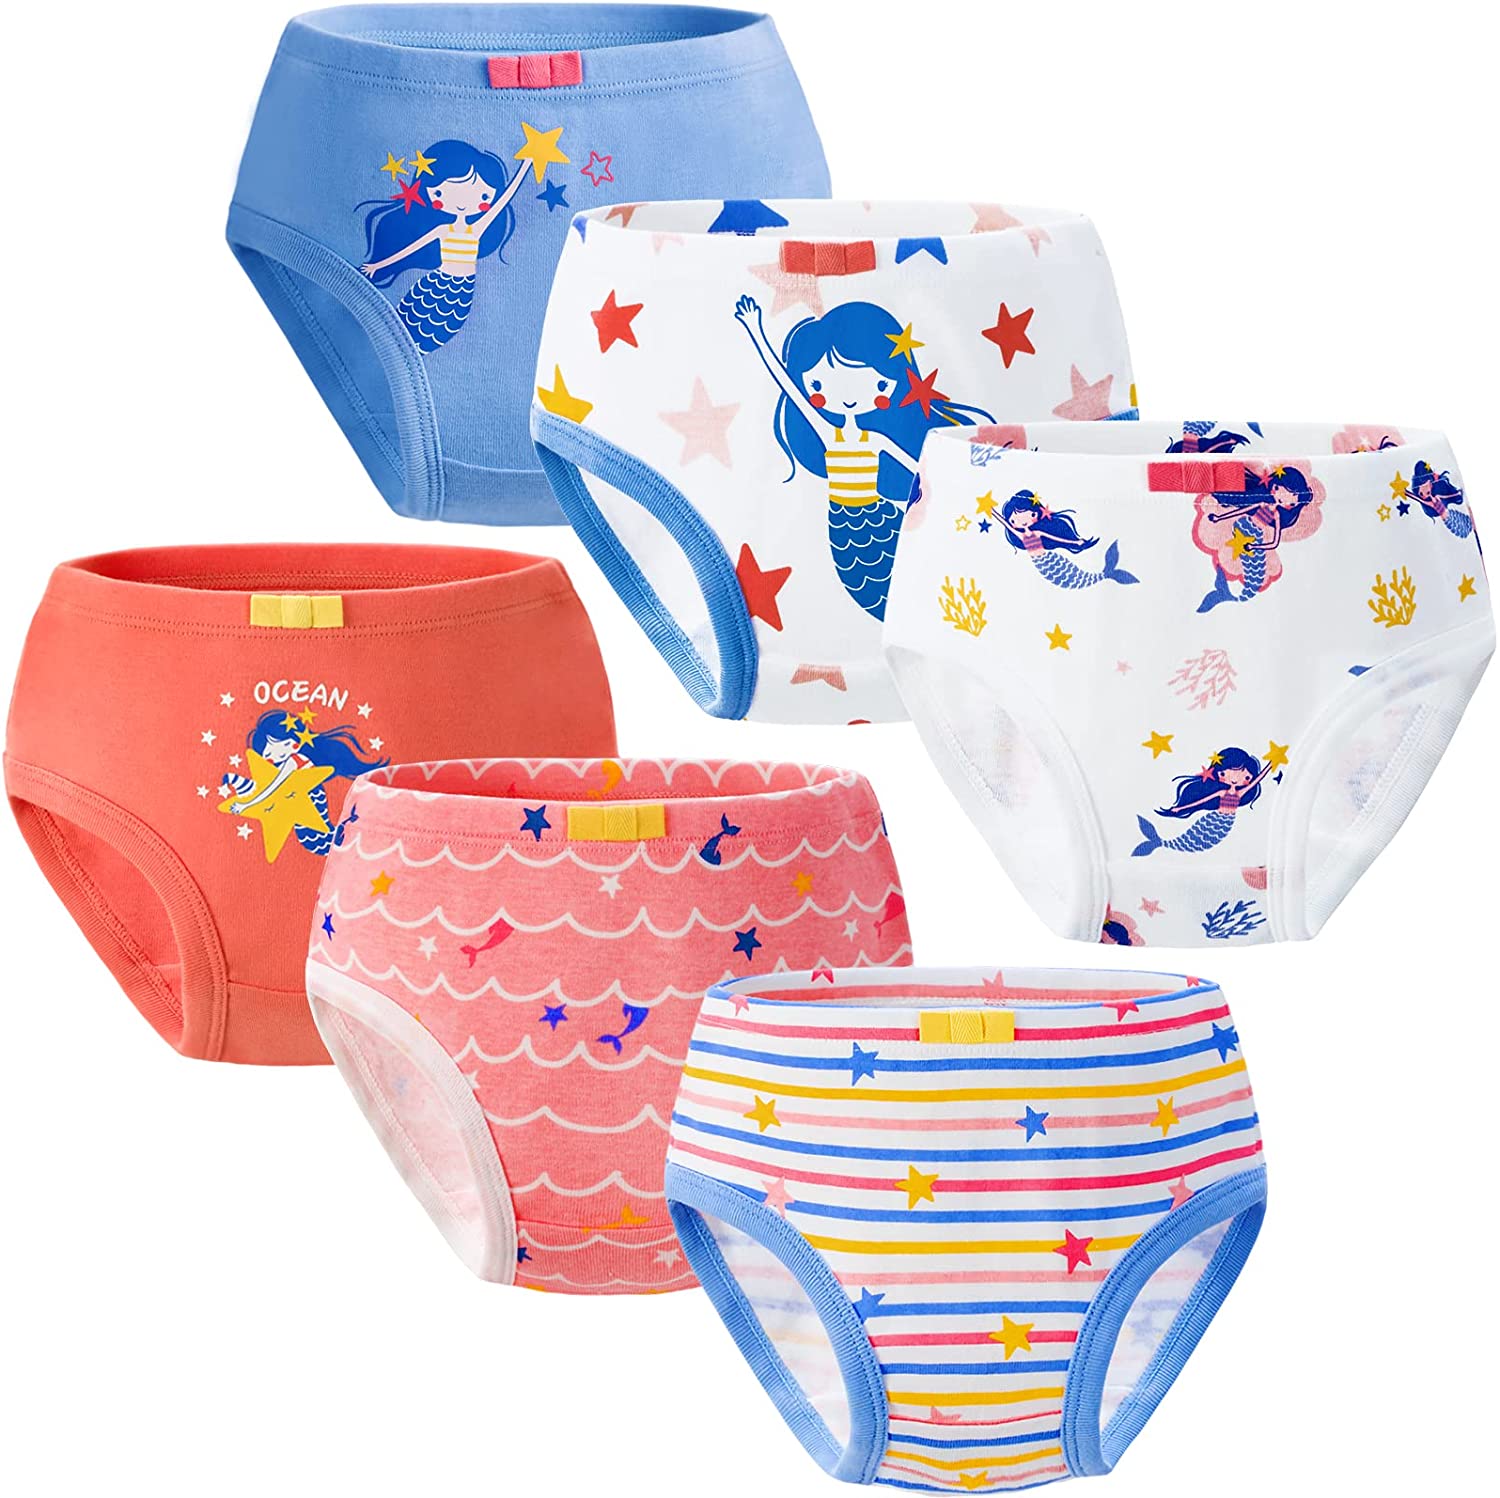  Toddler Girls Underwear Unicorn Mermaid Panties Soft Cotton  Briefs 3-4t Multicolored